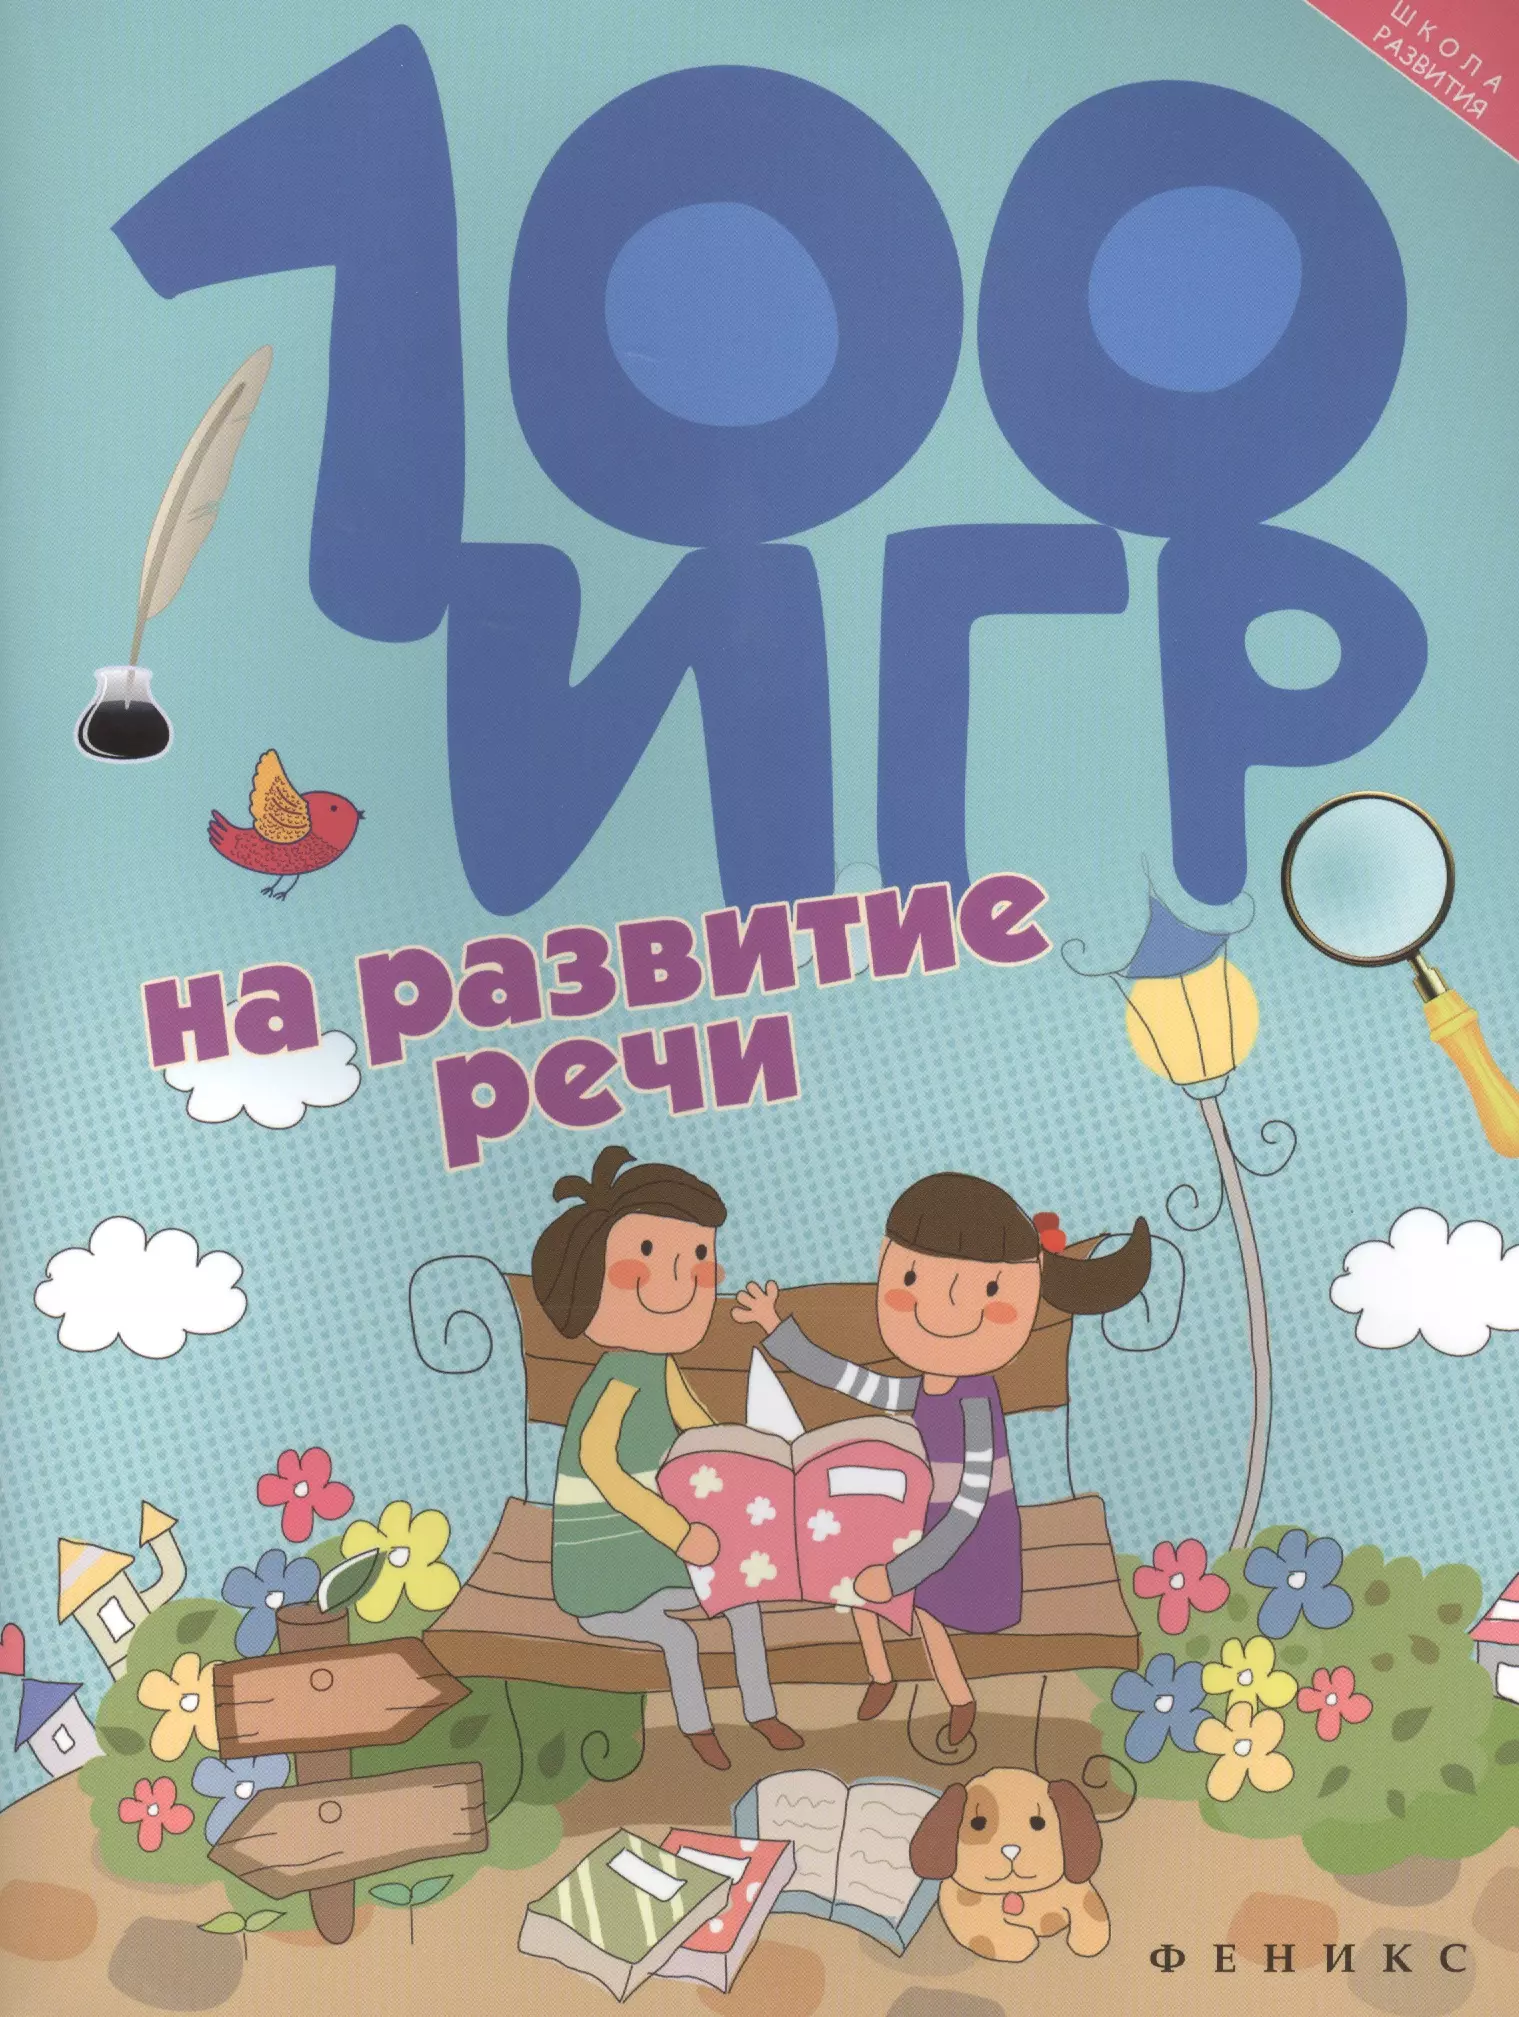 Ермилова Алла - 100 игр на развитие речи